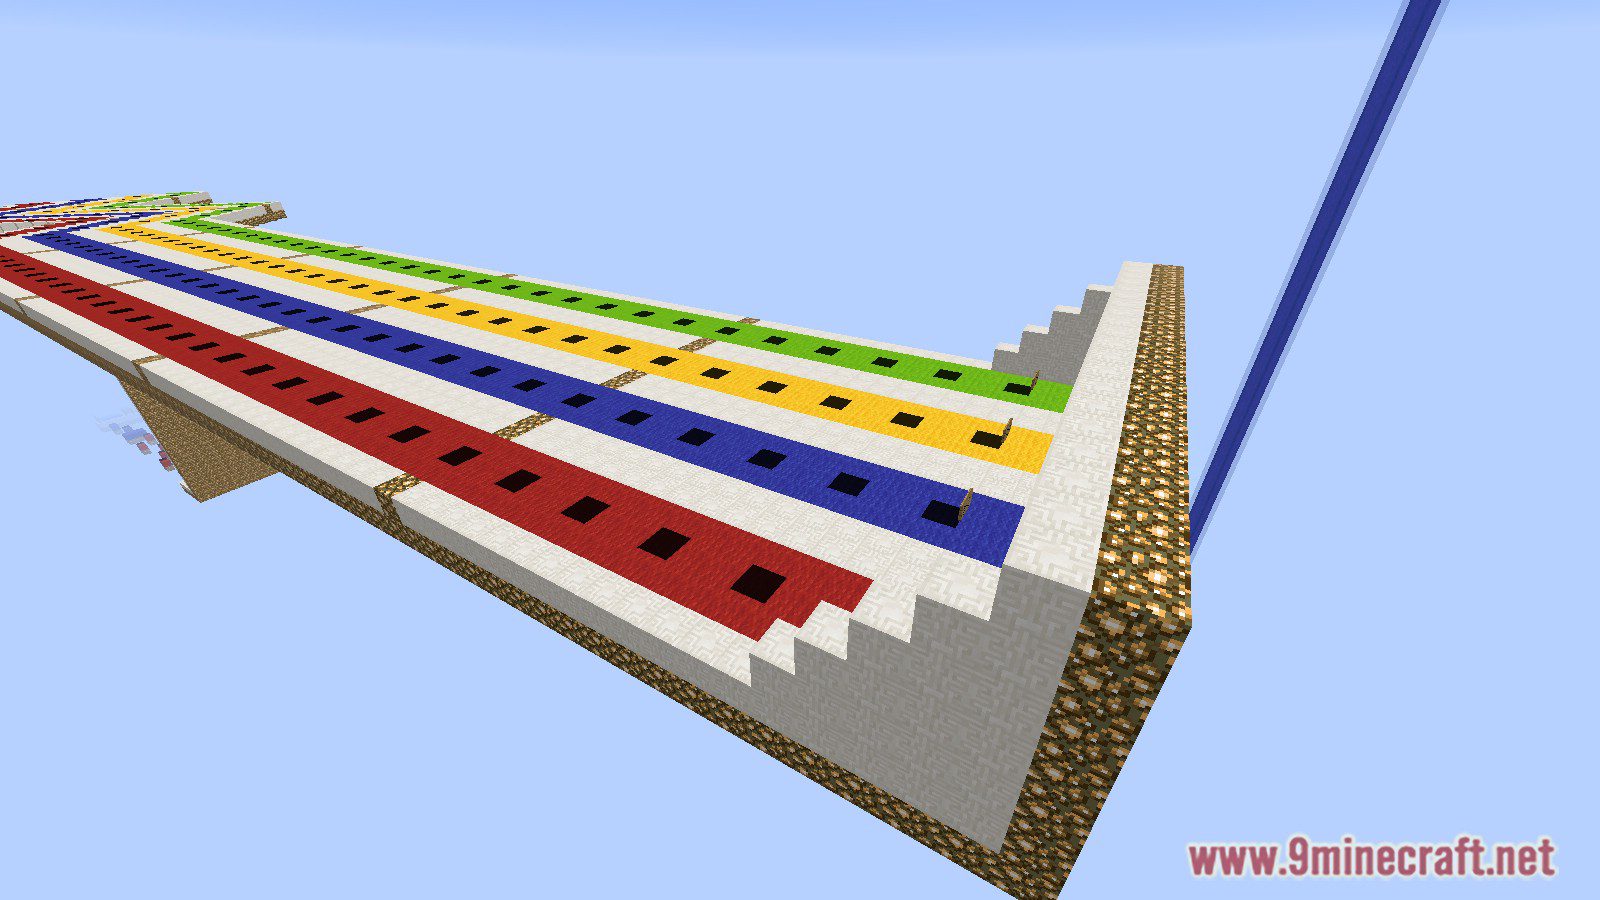 Rainbow Lucky Block Race [1.8] › Maps ›  — Minecraft Downloads